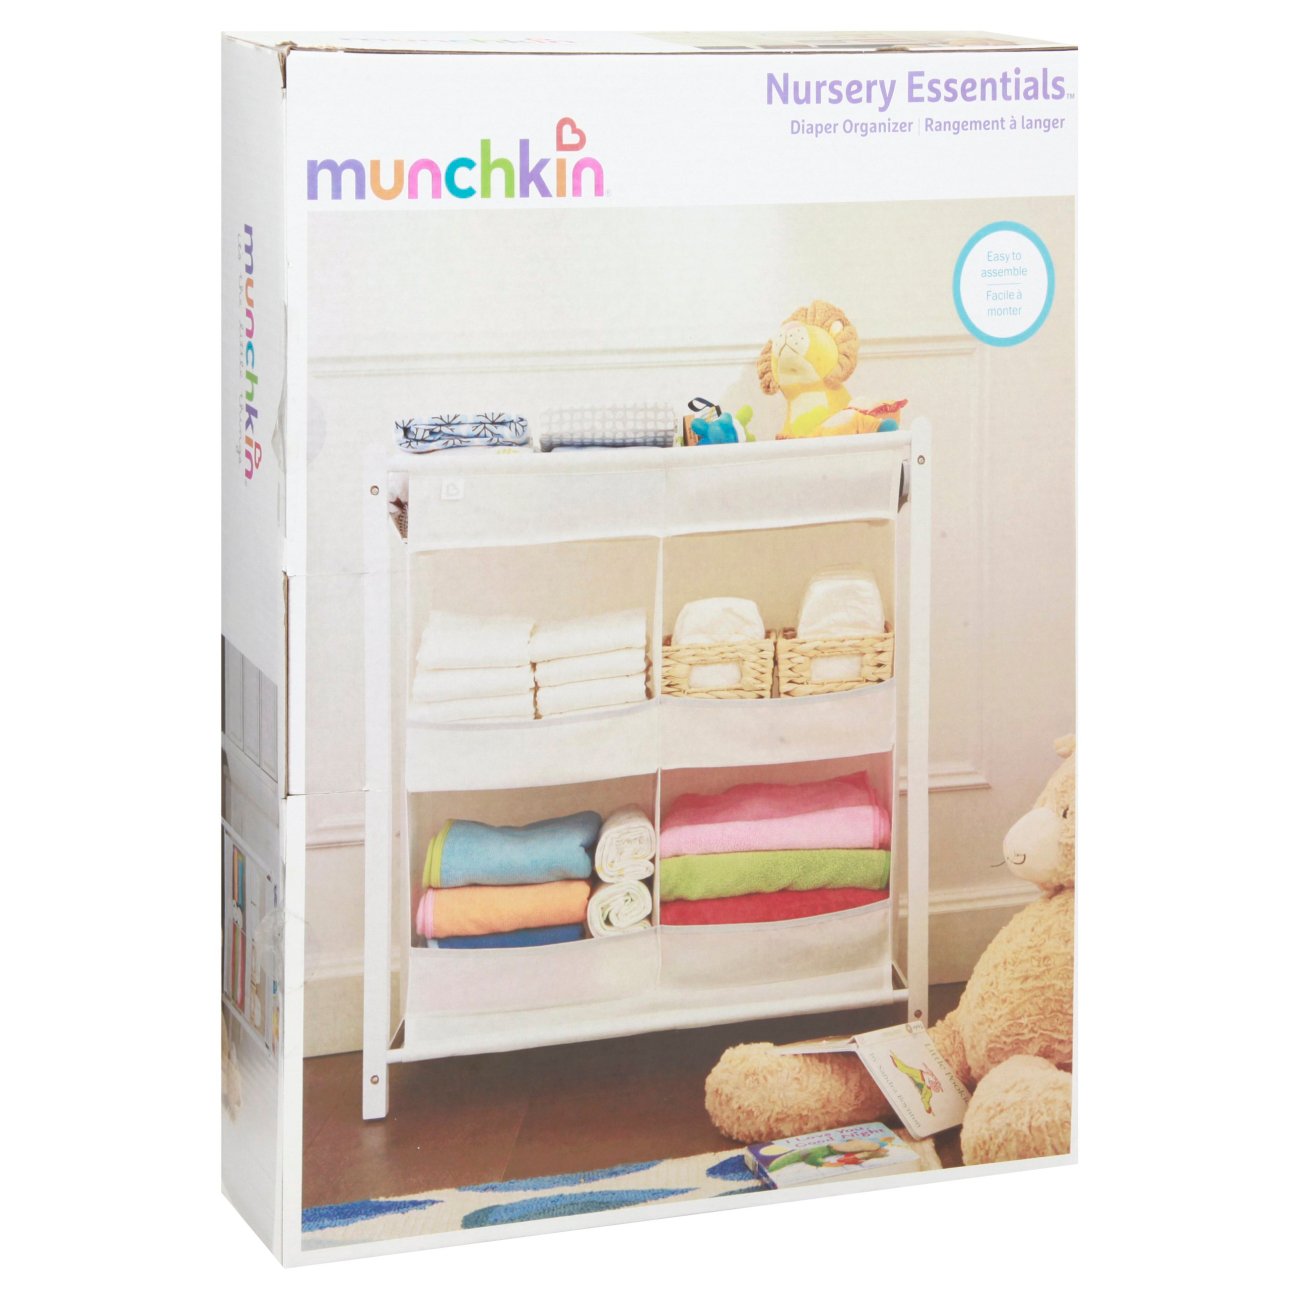 Sinis Plasticity enclose Munchkin Nursery Essentials Organizer - Shop Diapers & Potty at H-E-B